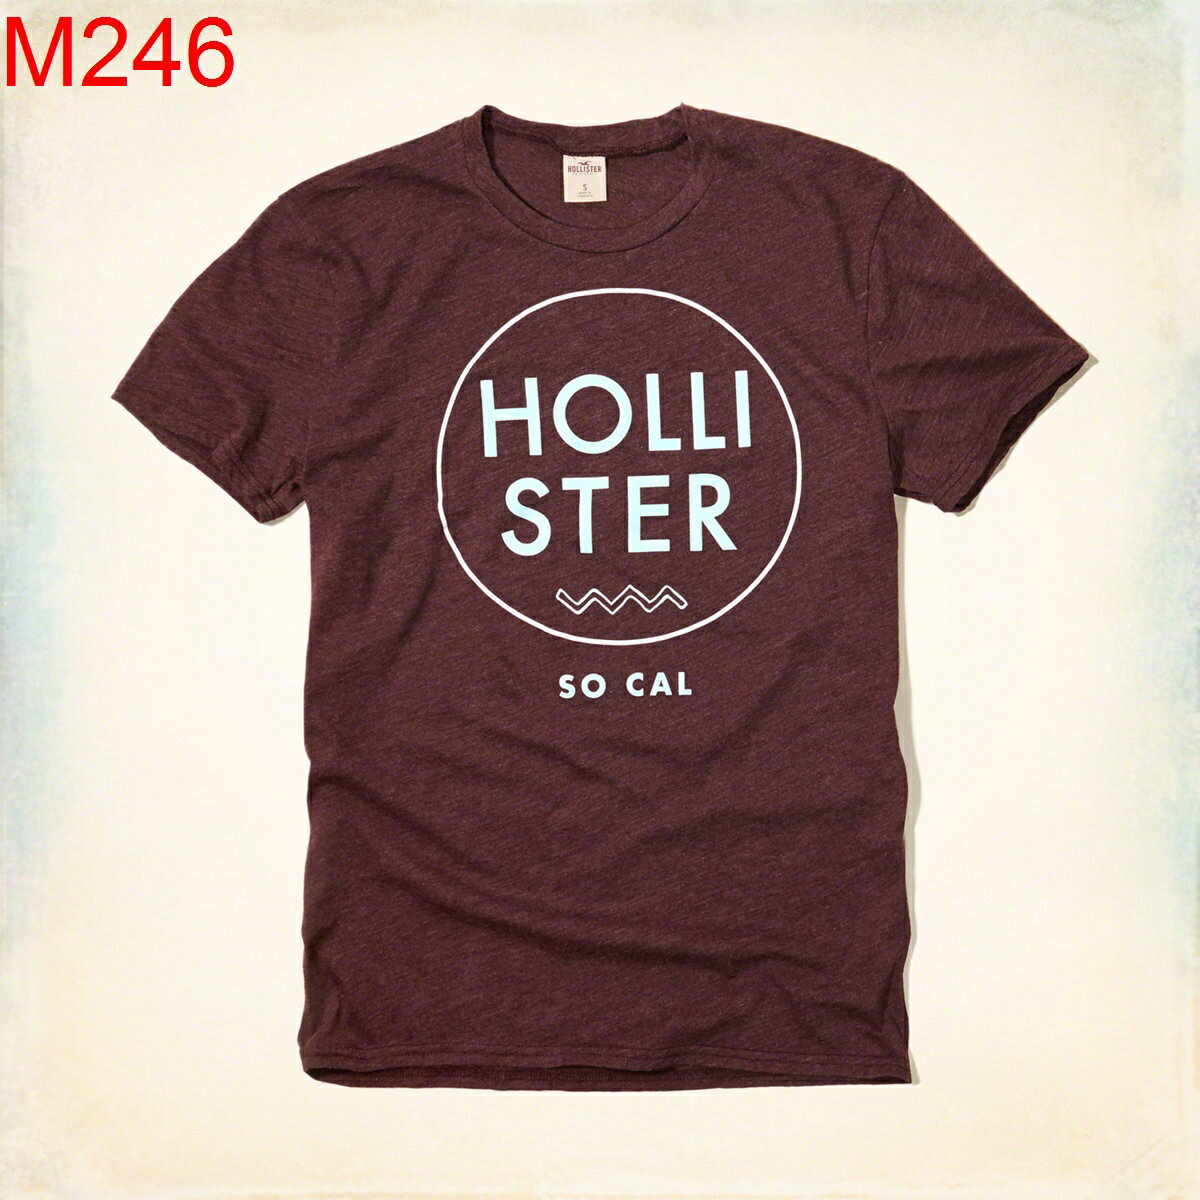 【AF 美國-store】HCO Hollister Co. 男 當季最新現貨 T-SHIRT HCO M246